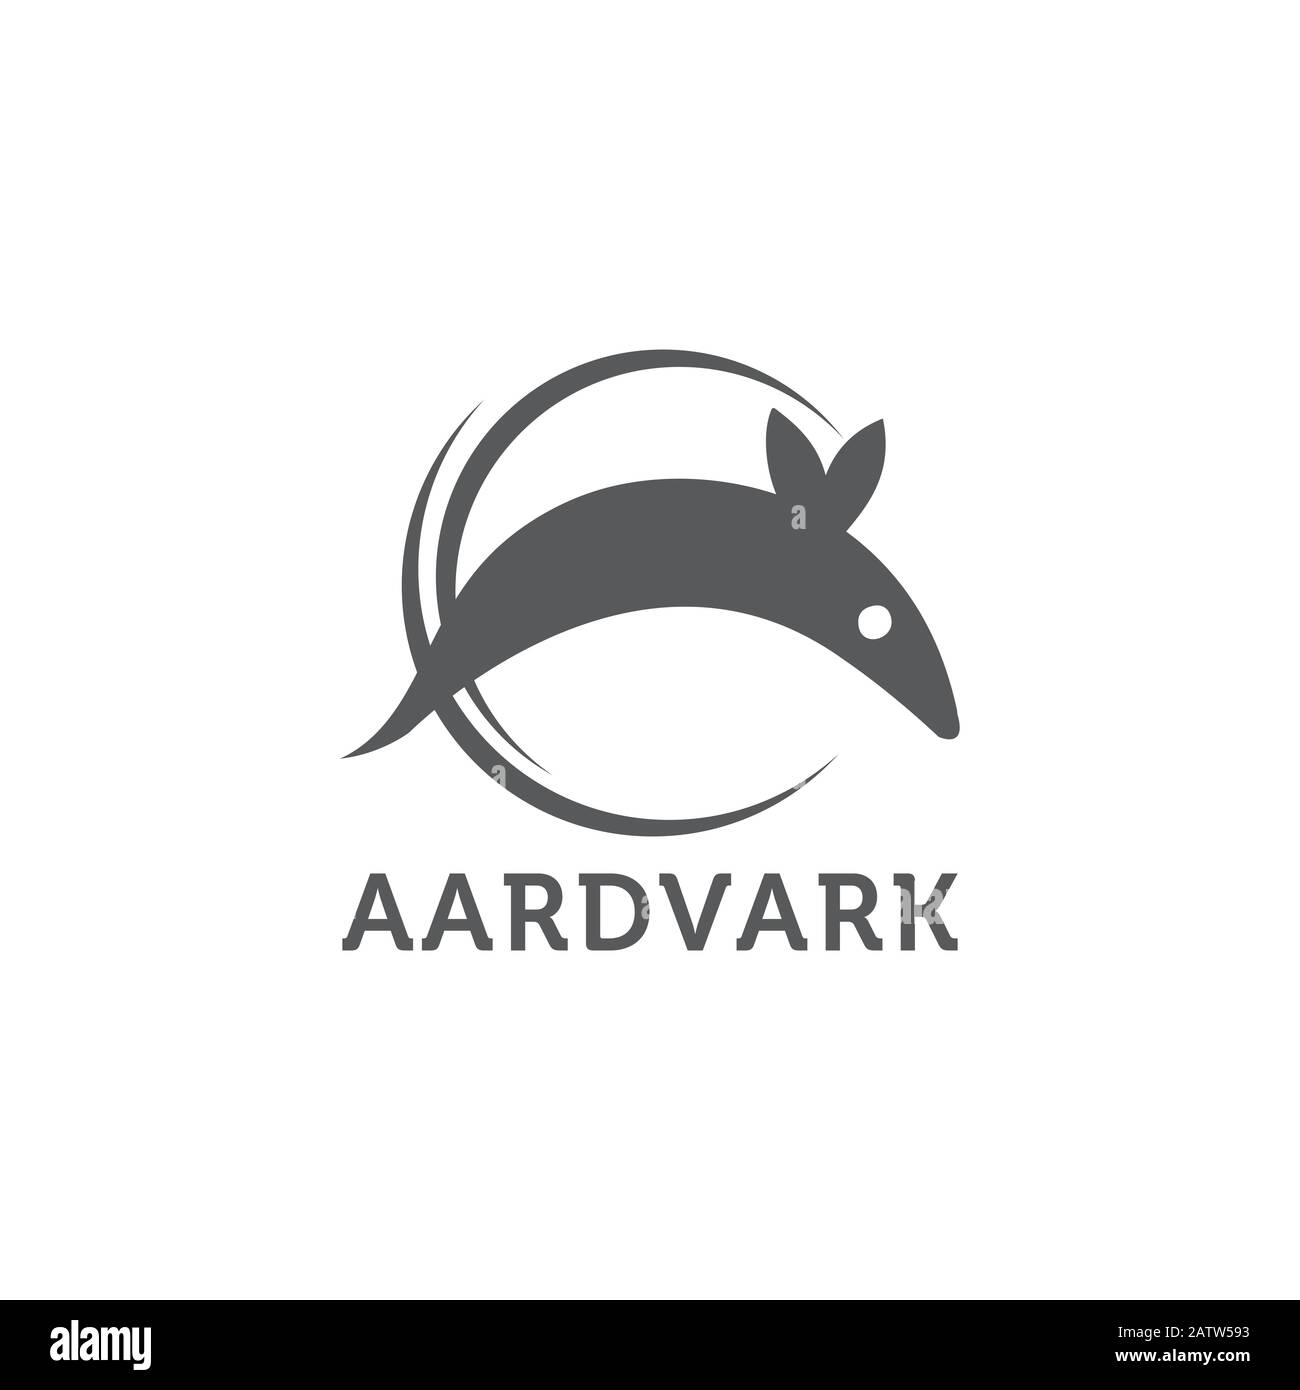 Aardvark animal sketch engraving vector illustration. Scratch board style imitation. Hand drawn image. Stock Vector